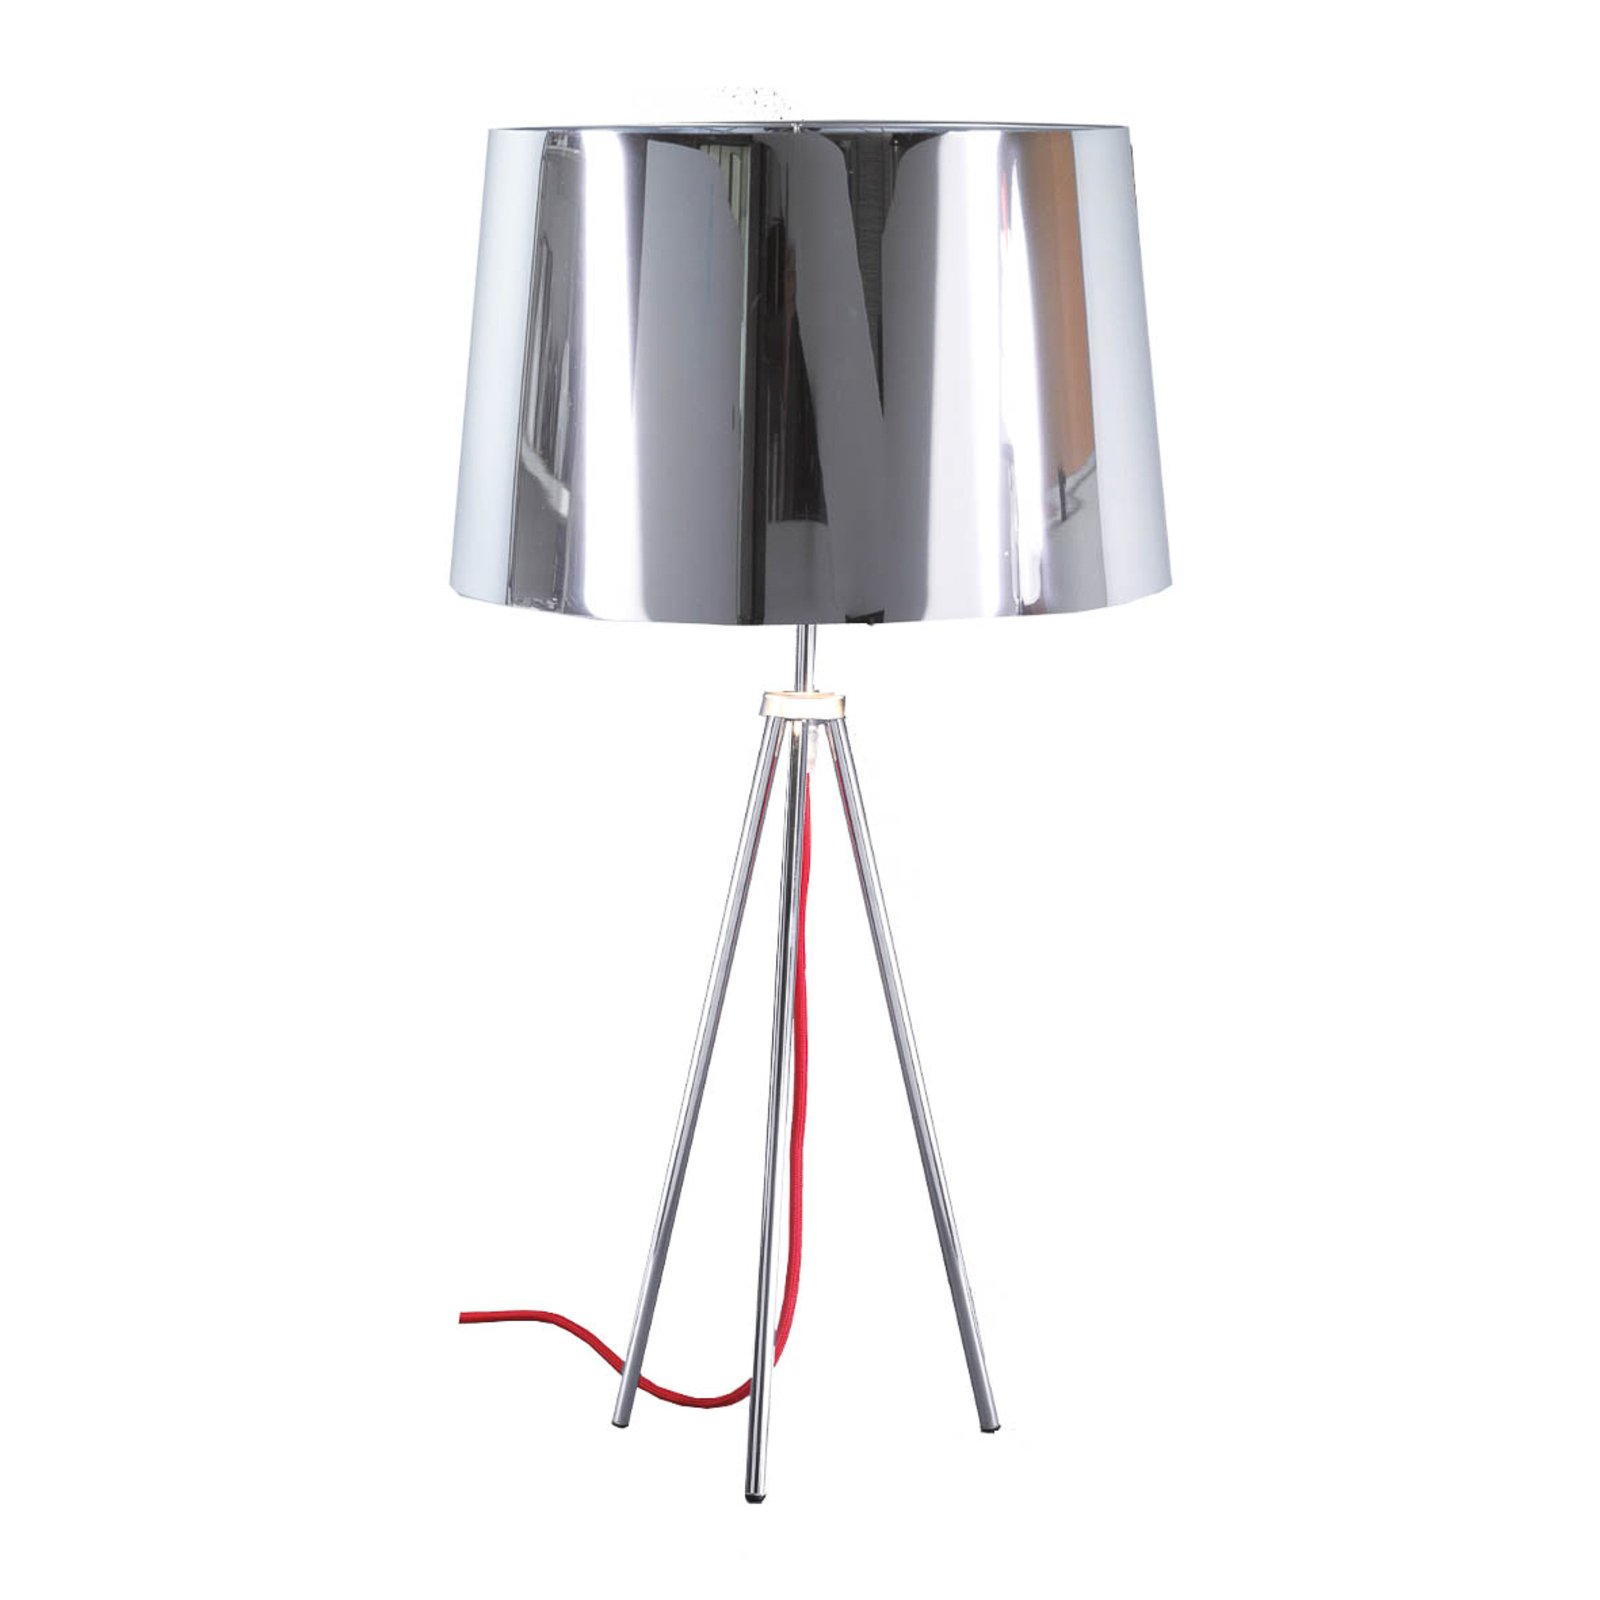 Aluminor Tropic bordlampe, krom, rødt kabel